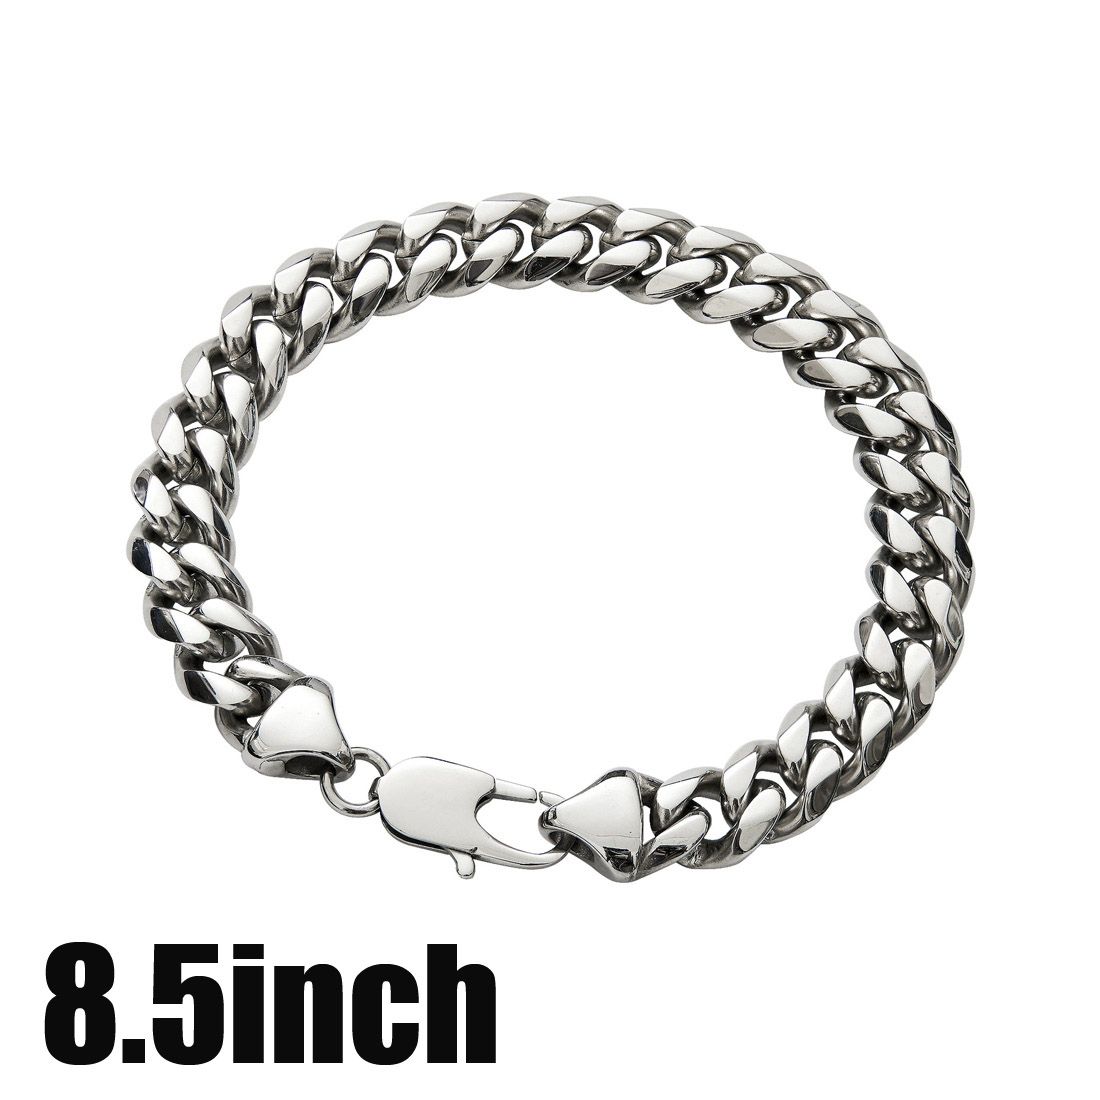 Bracelet 8.5inch